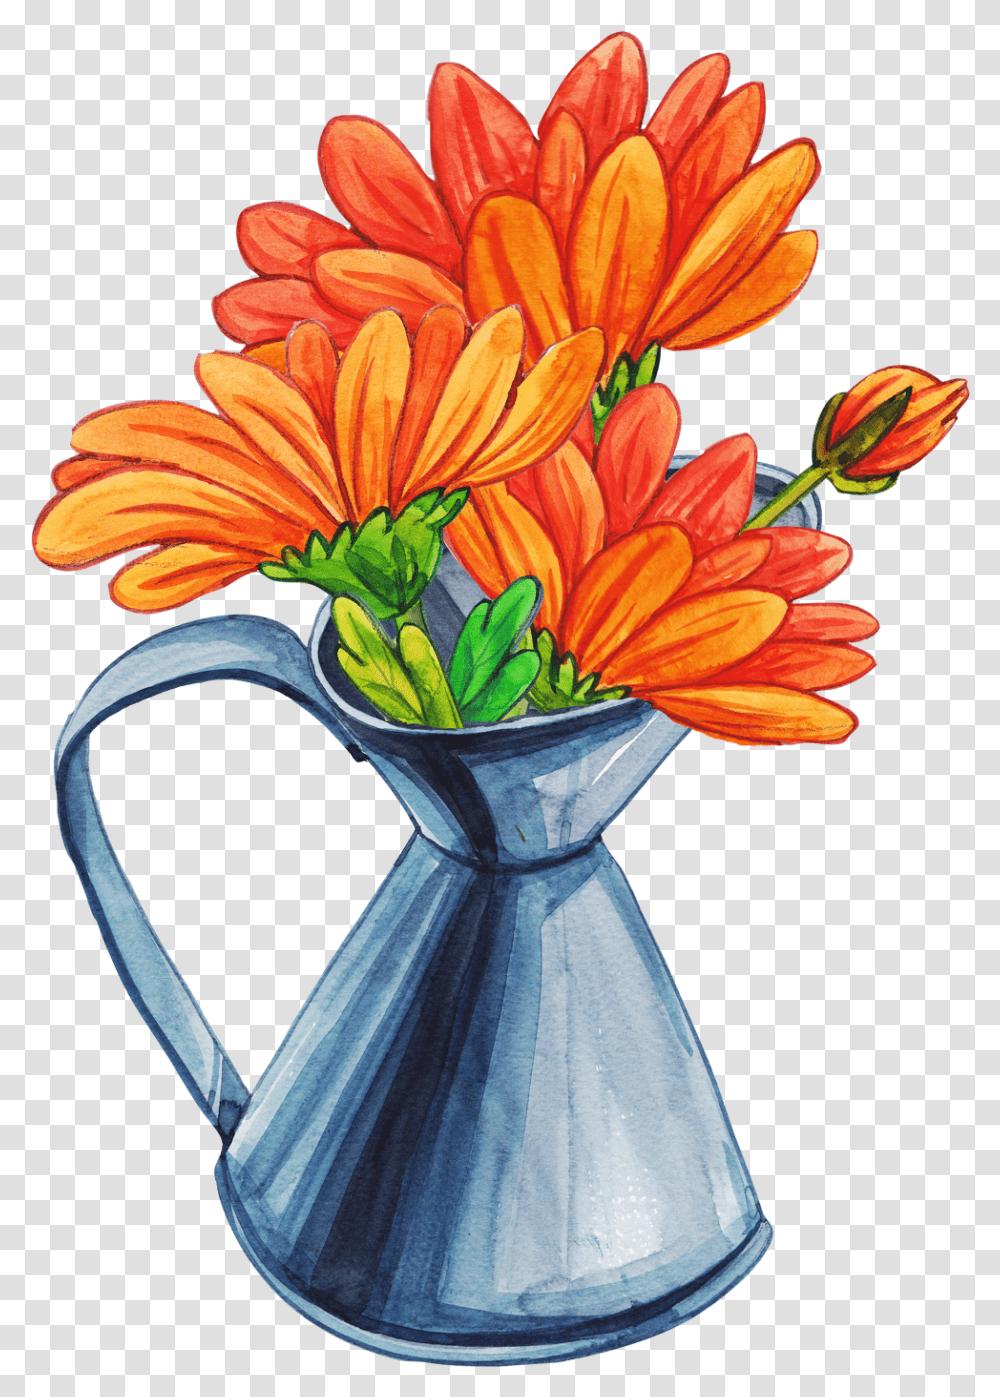 Flower Vase Cartoon Flower Vase Cartoon, Plant, Blossom, Flower Arrangement, Flower Bouquet Transparent Png